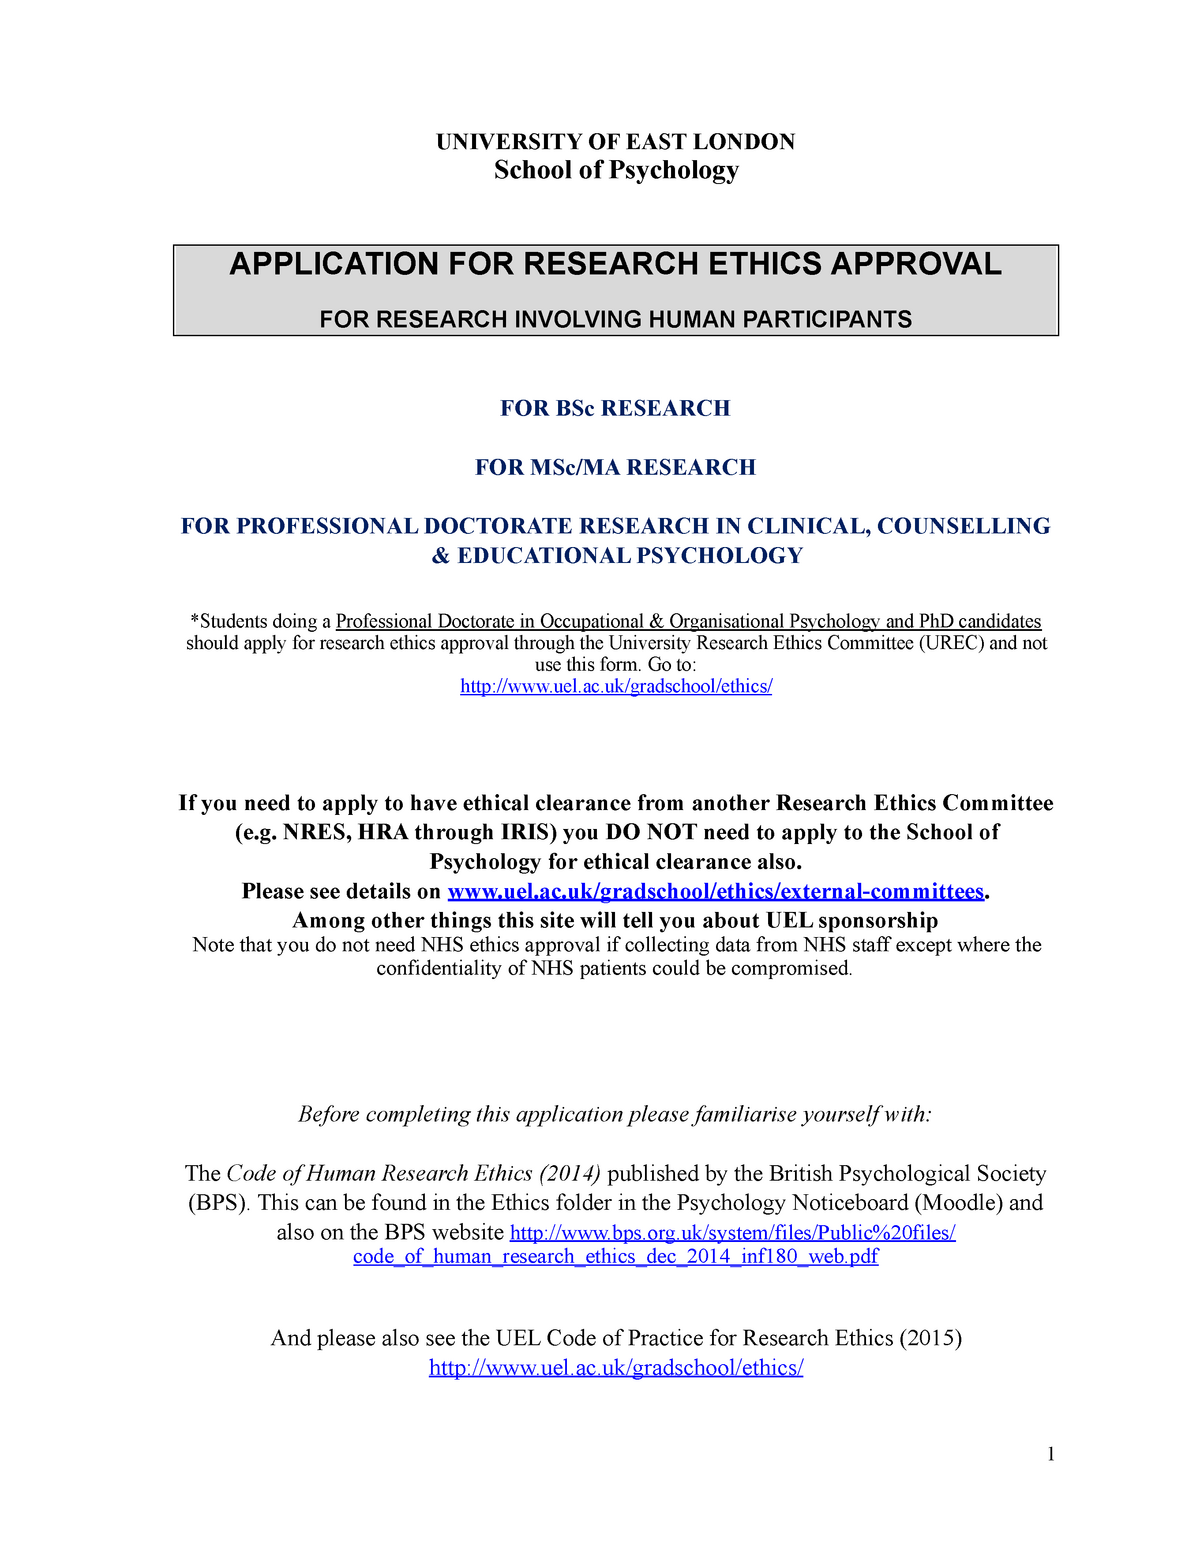 cover letter for ethics application